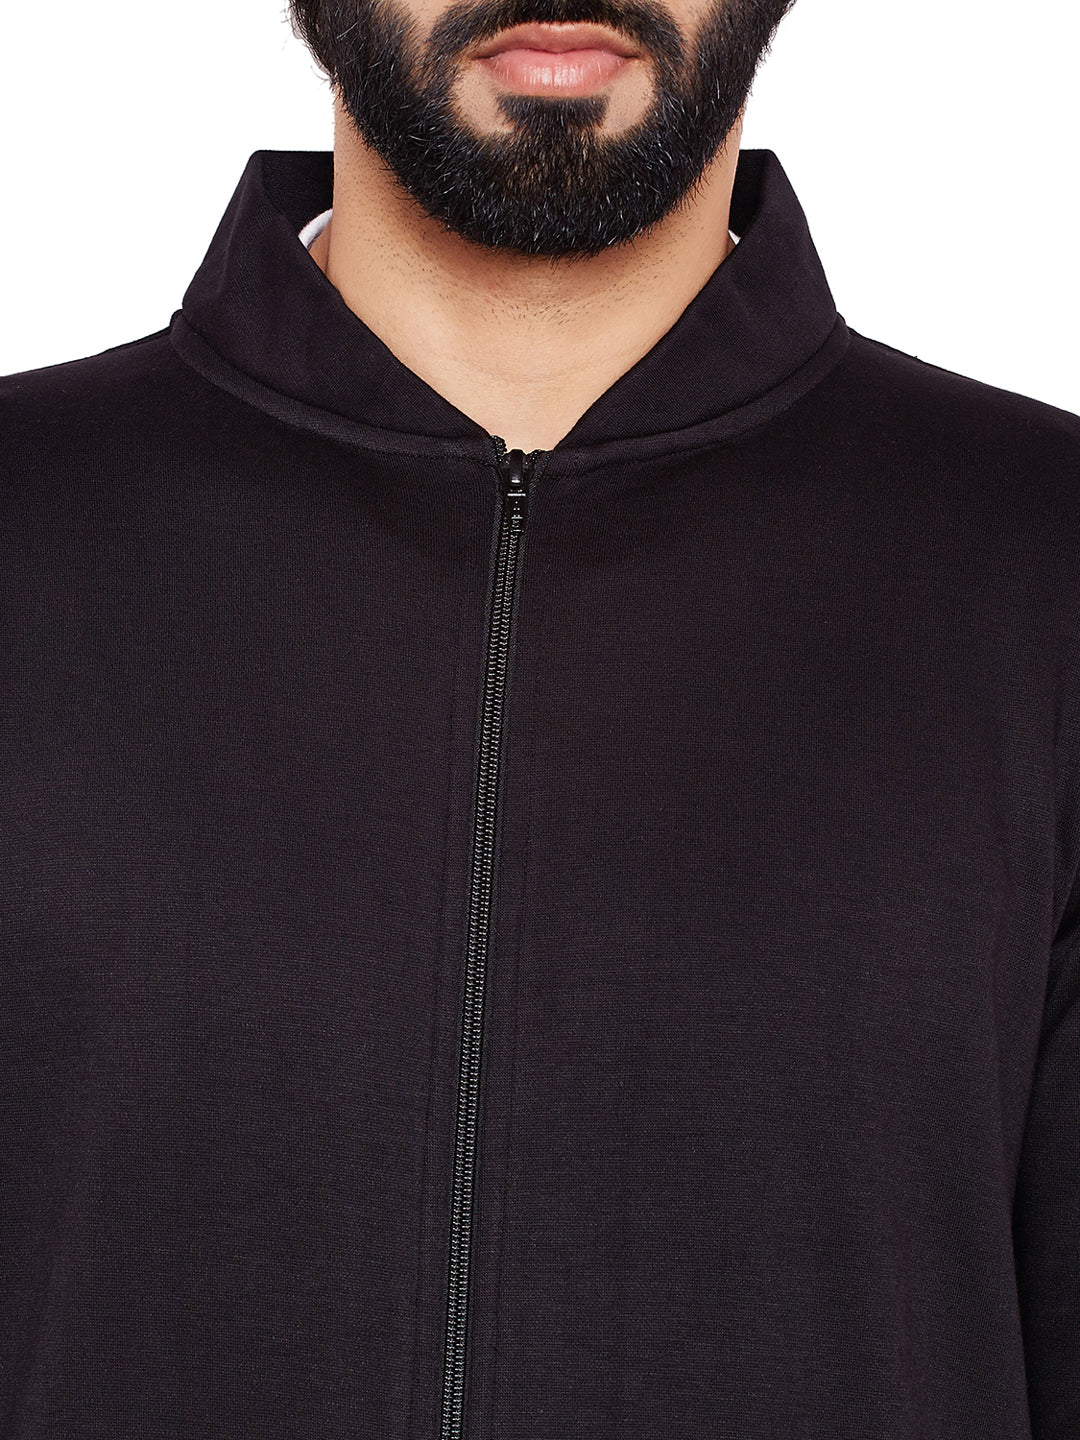 Men Black Solid Mandarin Collar Sweatshirt